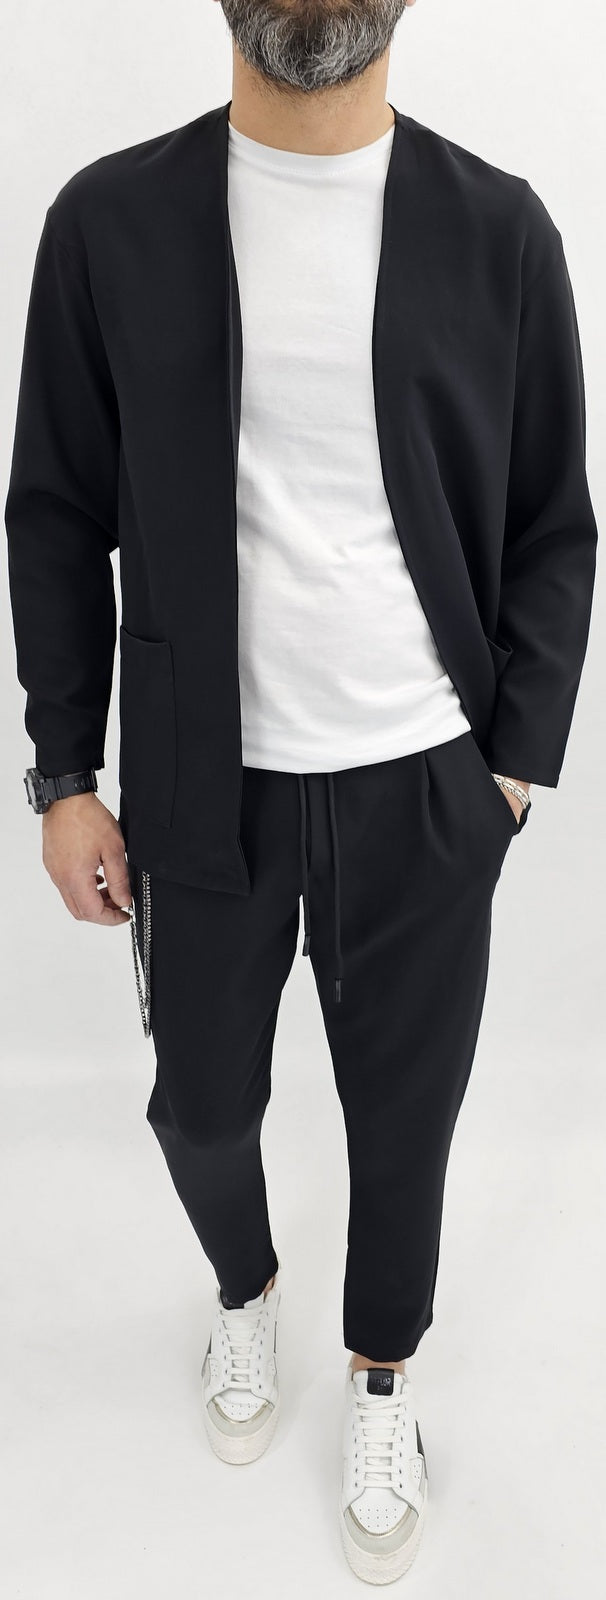 Completo uomo modello Japan over size tessuto morbido giacca e pantalone italy